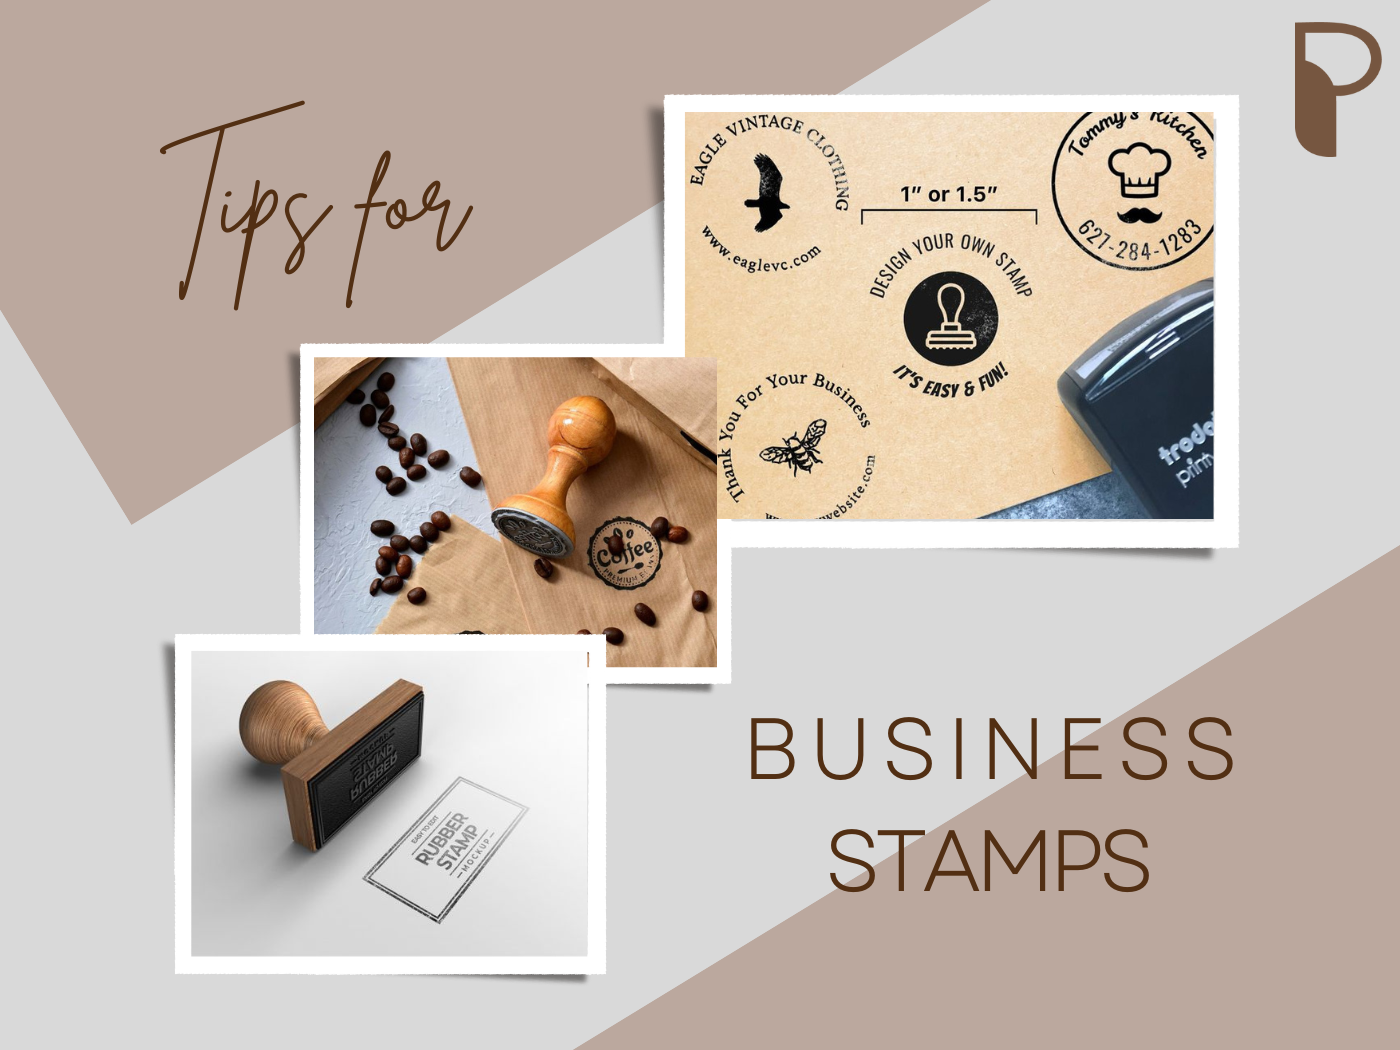 Self Ink Stamp Maker - China Stamp, Self Ink